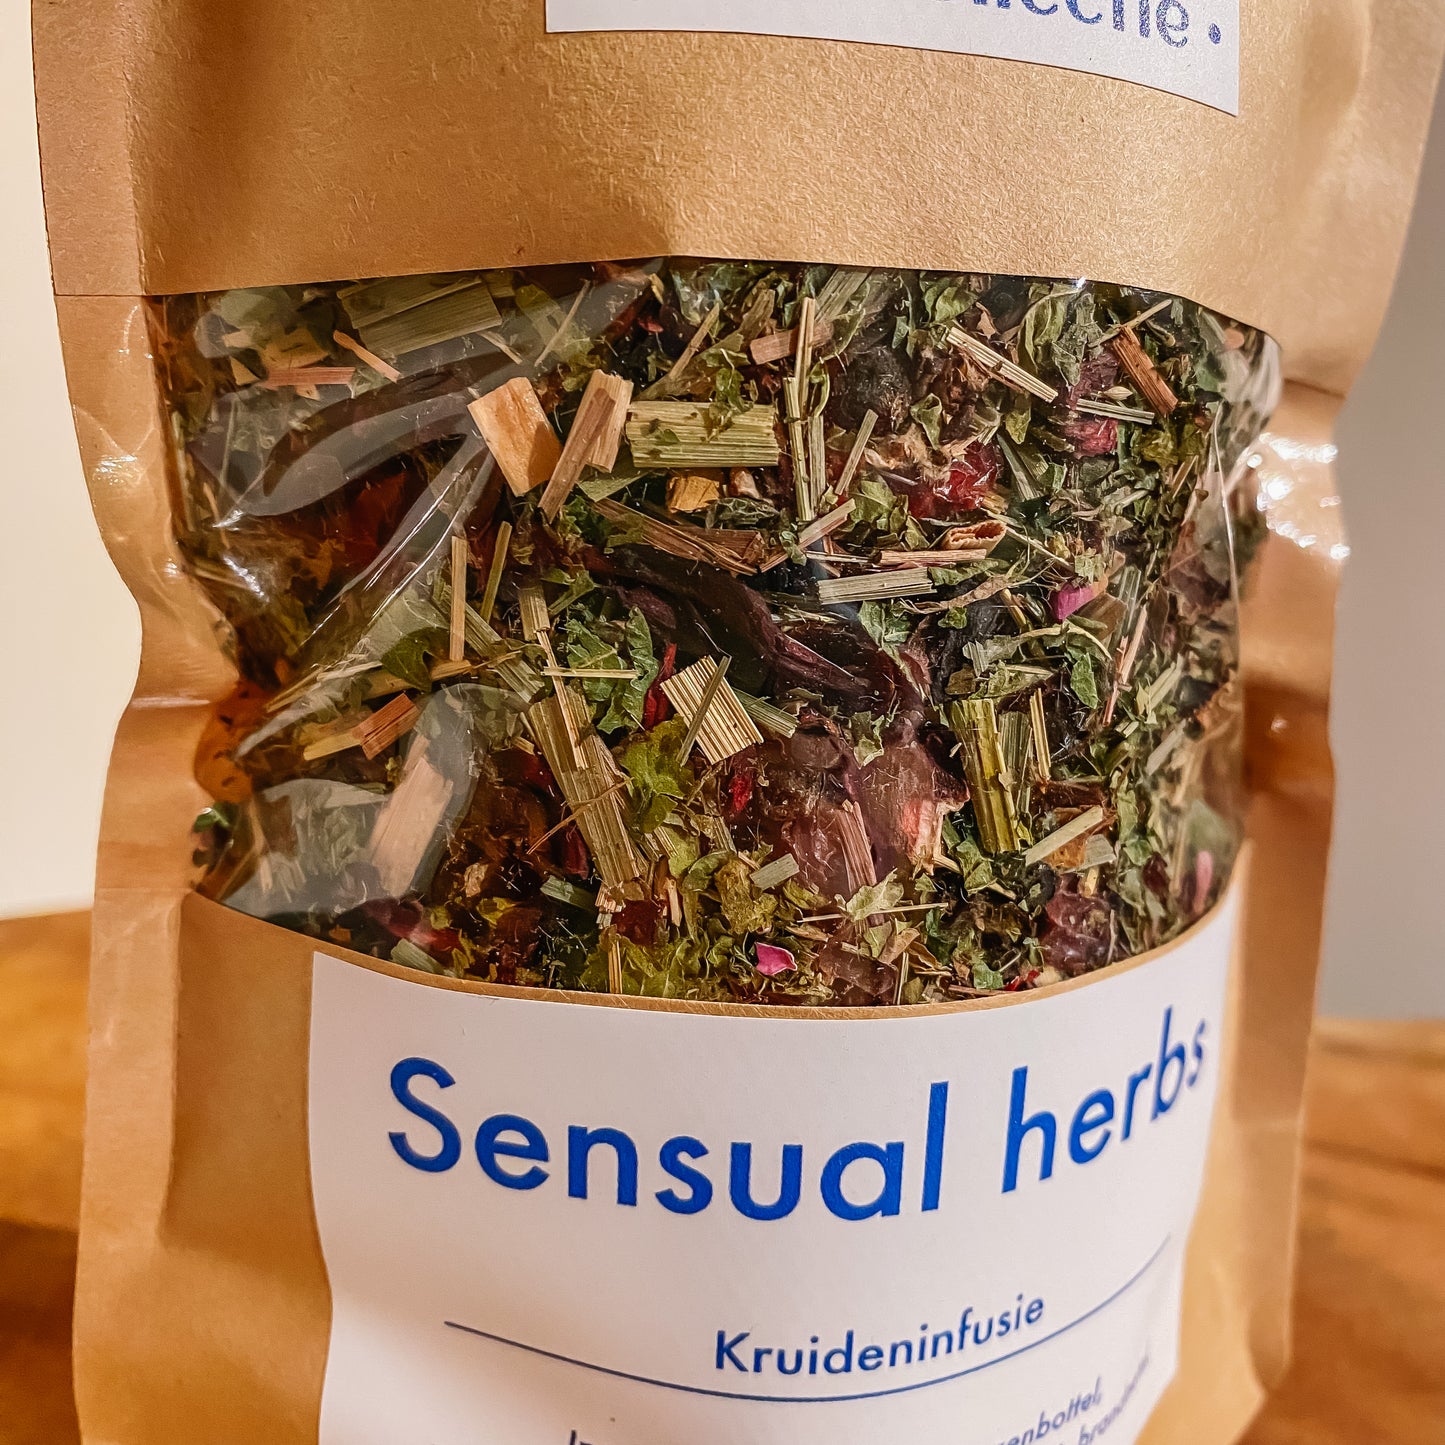 Sensual herbs